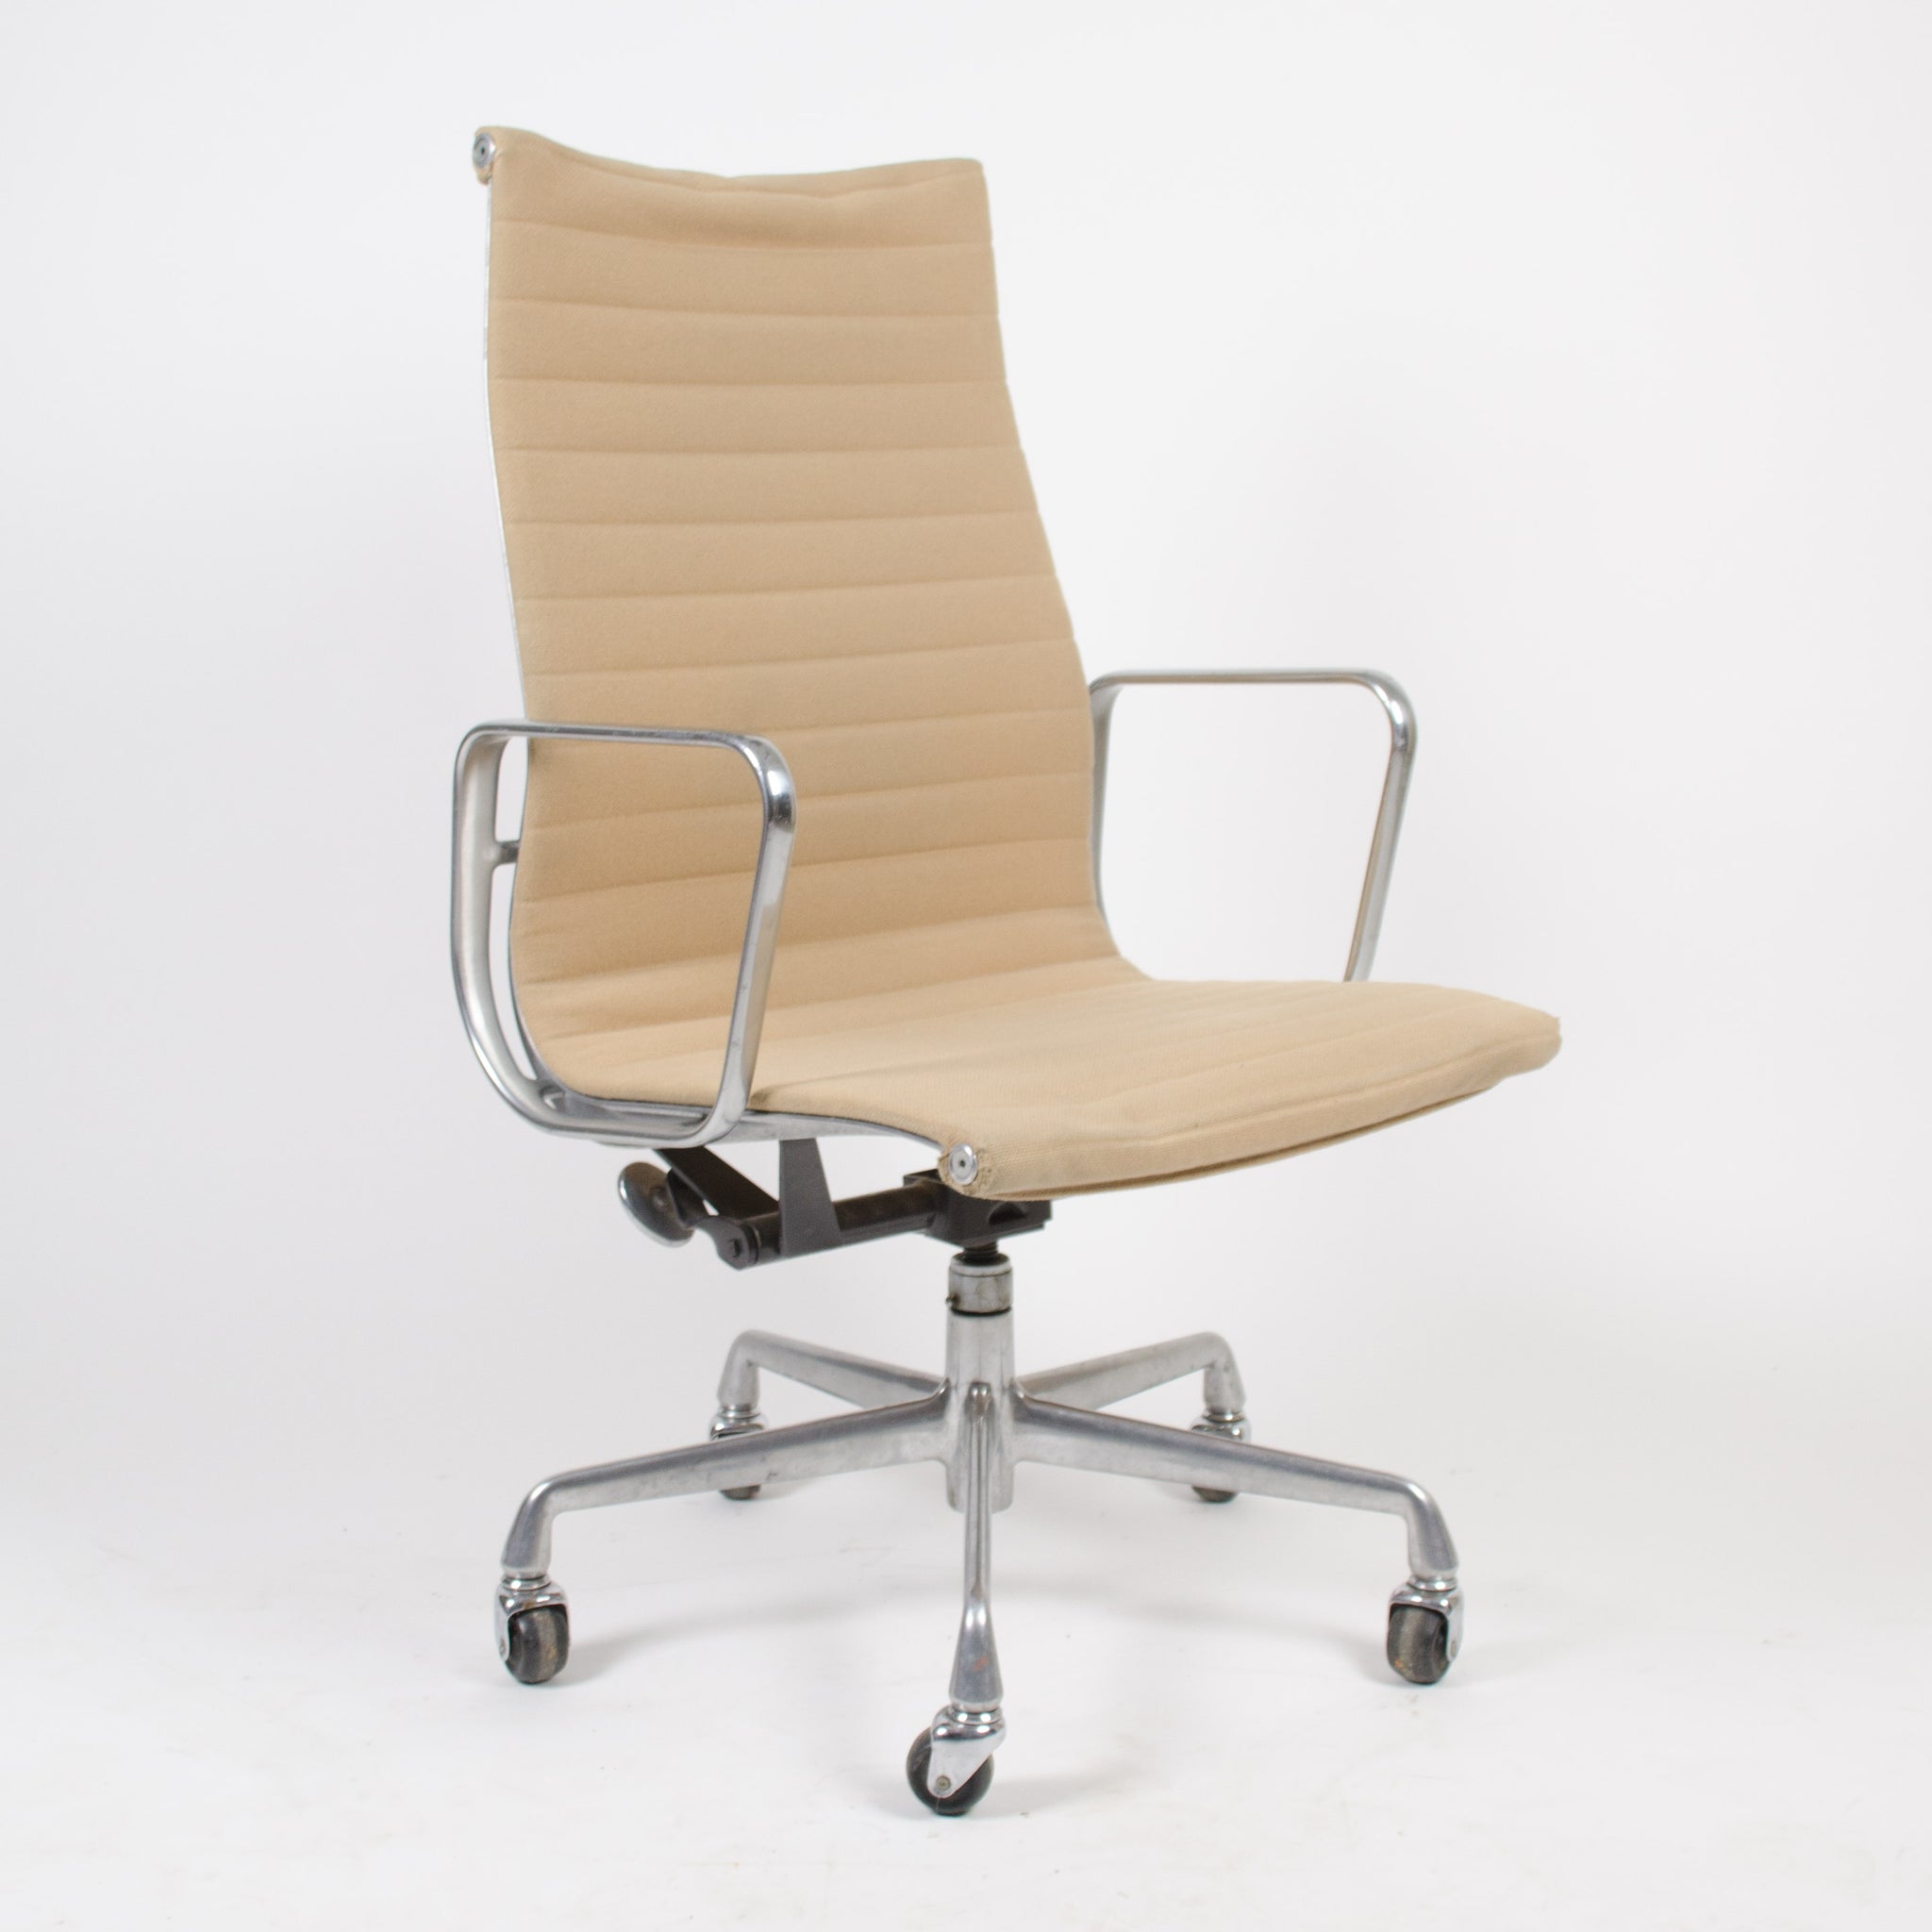 SOLD Herman Miller Eames Aluminum Group High Back Desk Chair Tan Hopsack 90's